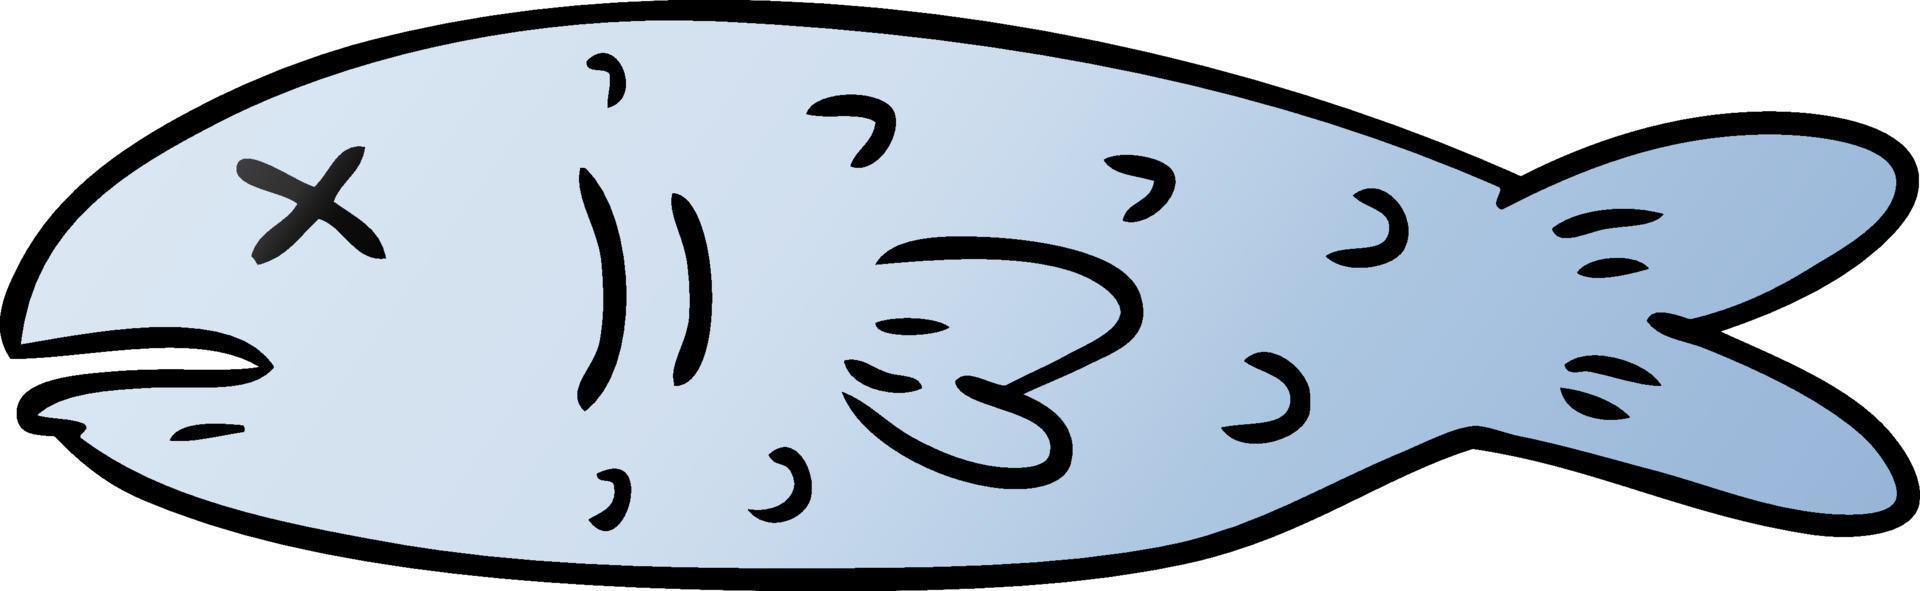 gradient cartoon doodle of a dead fish vector